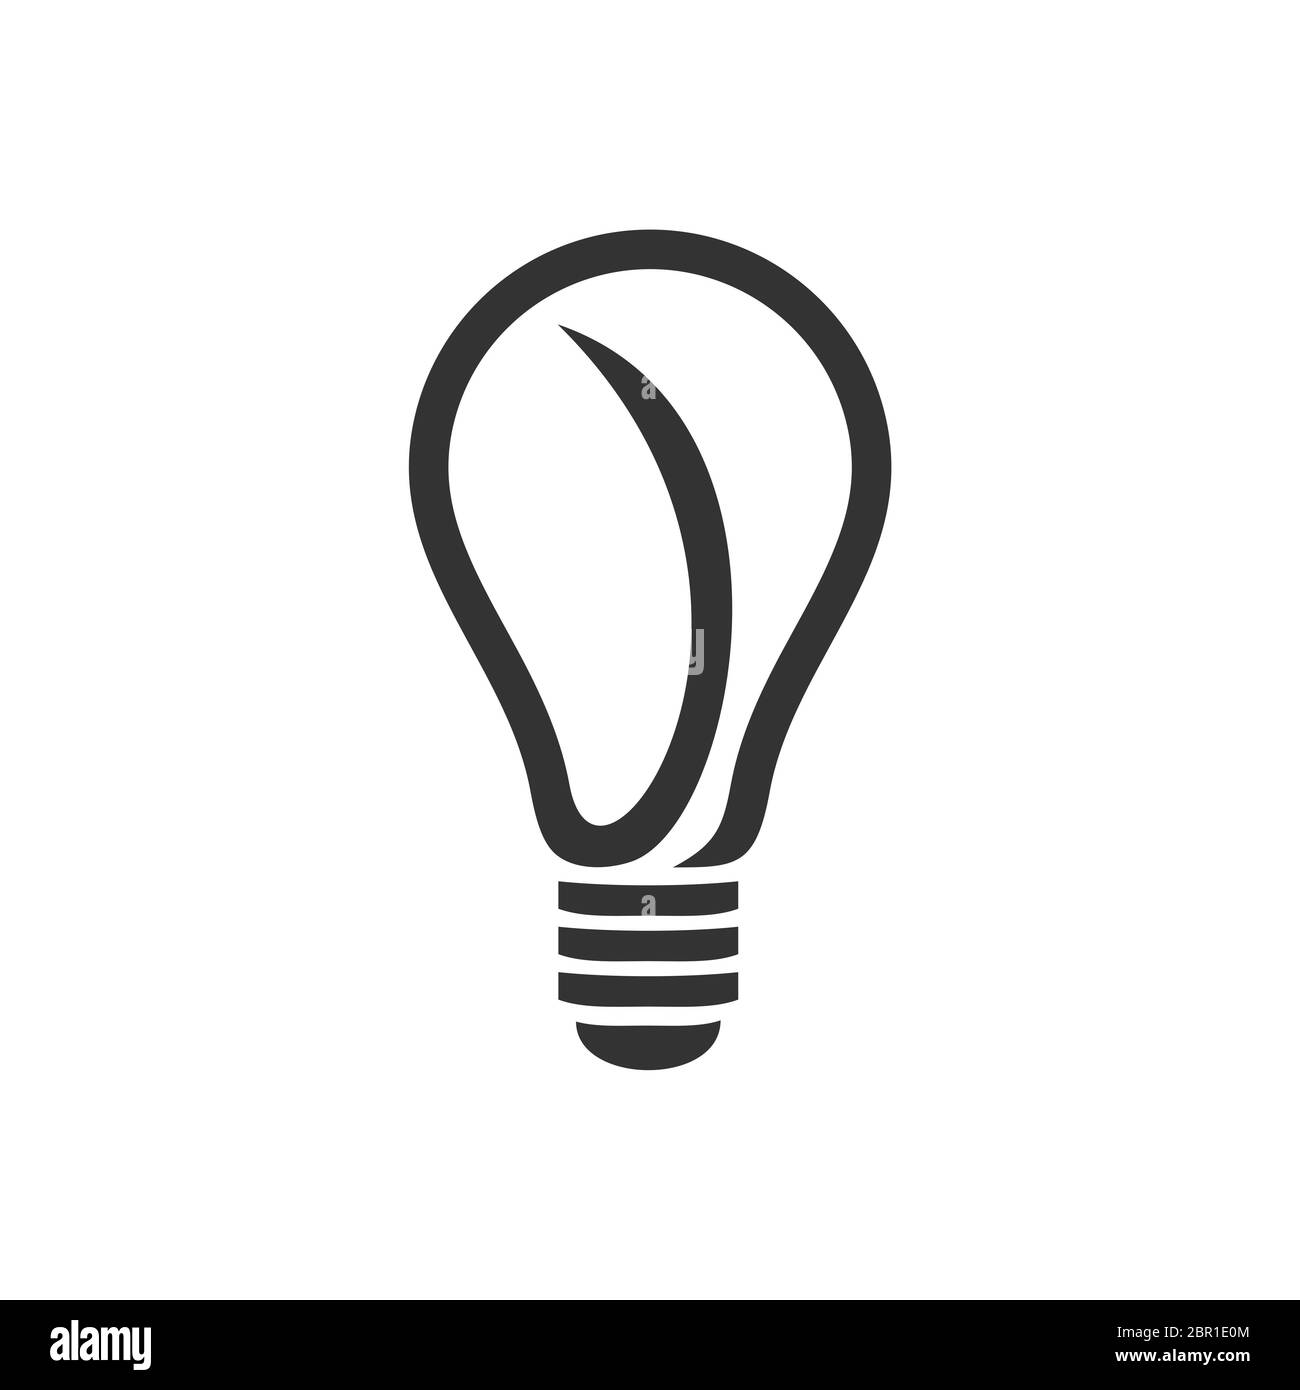 Leuchtmittel Lampe Logo Vorlage Illustration Design. Vektor EPS 10  Stockfotografie - Alamy